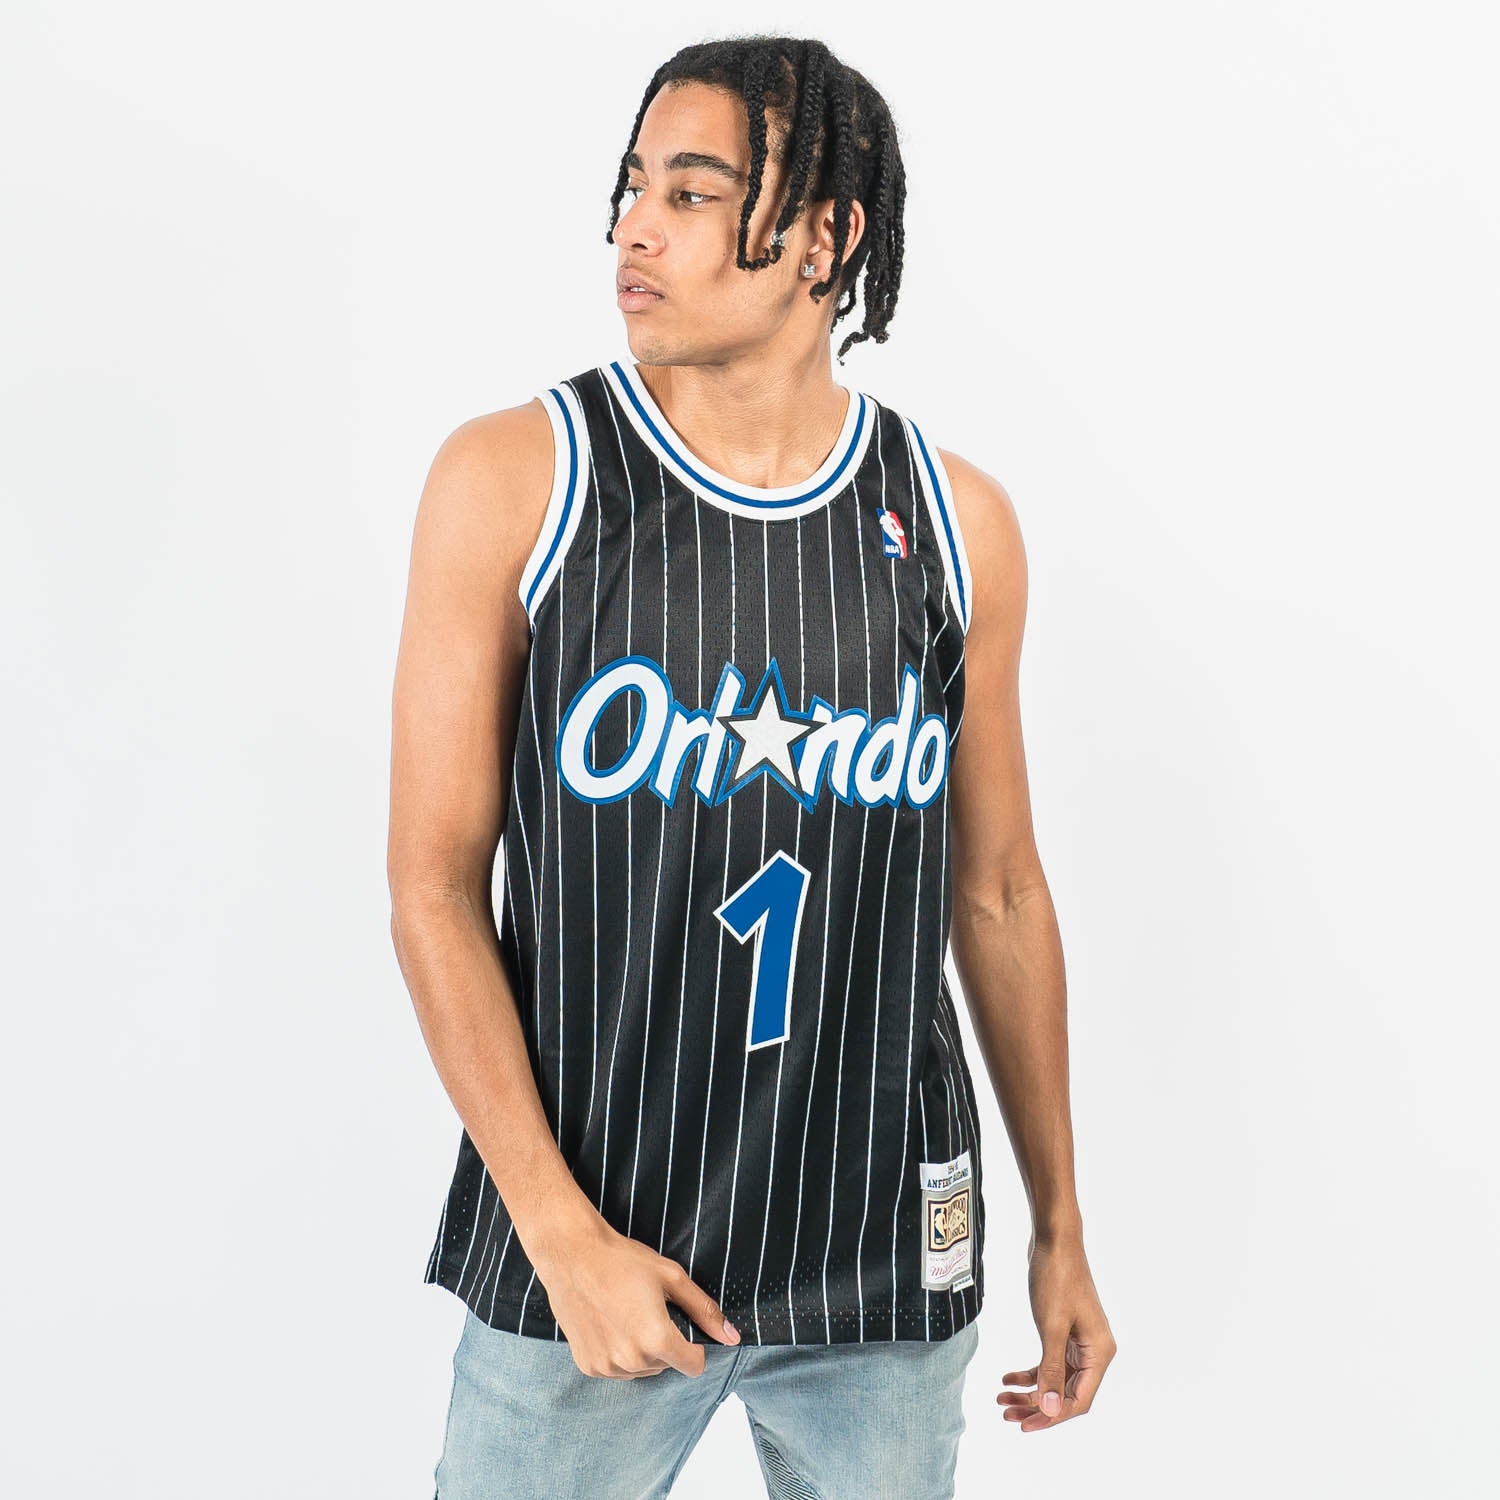 Orlando Magic Johnson Adidas Basketball Jersey NBA Black and 